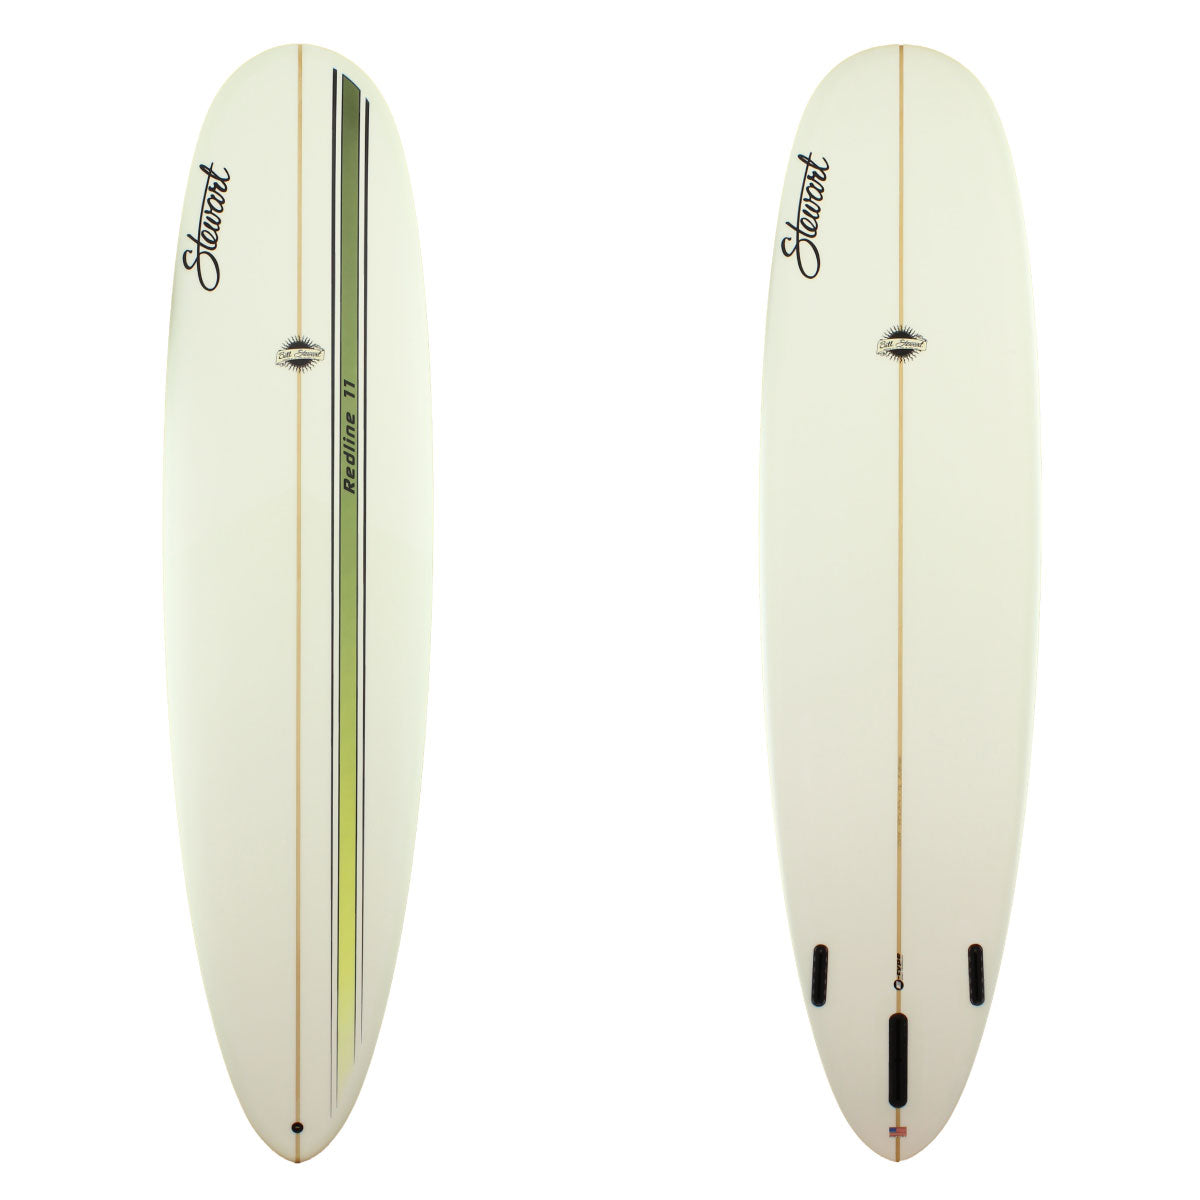 Stewart Surfboards Redline 11 longboard (9'0", 24 1/2", 3 1/2") with green and black stripes on deck